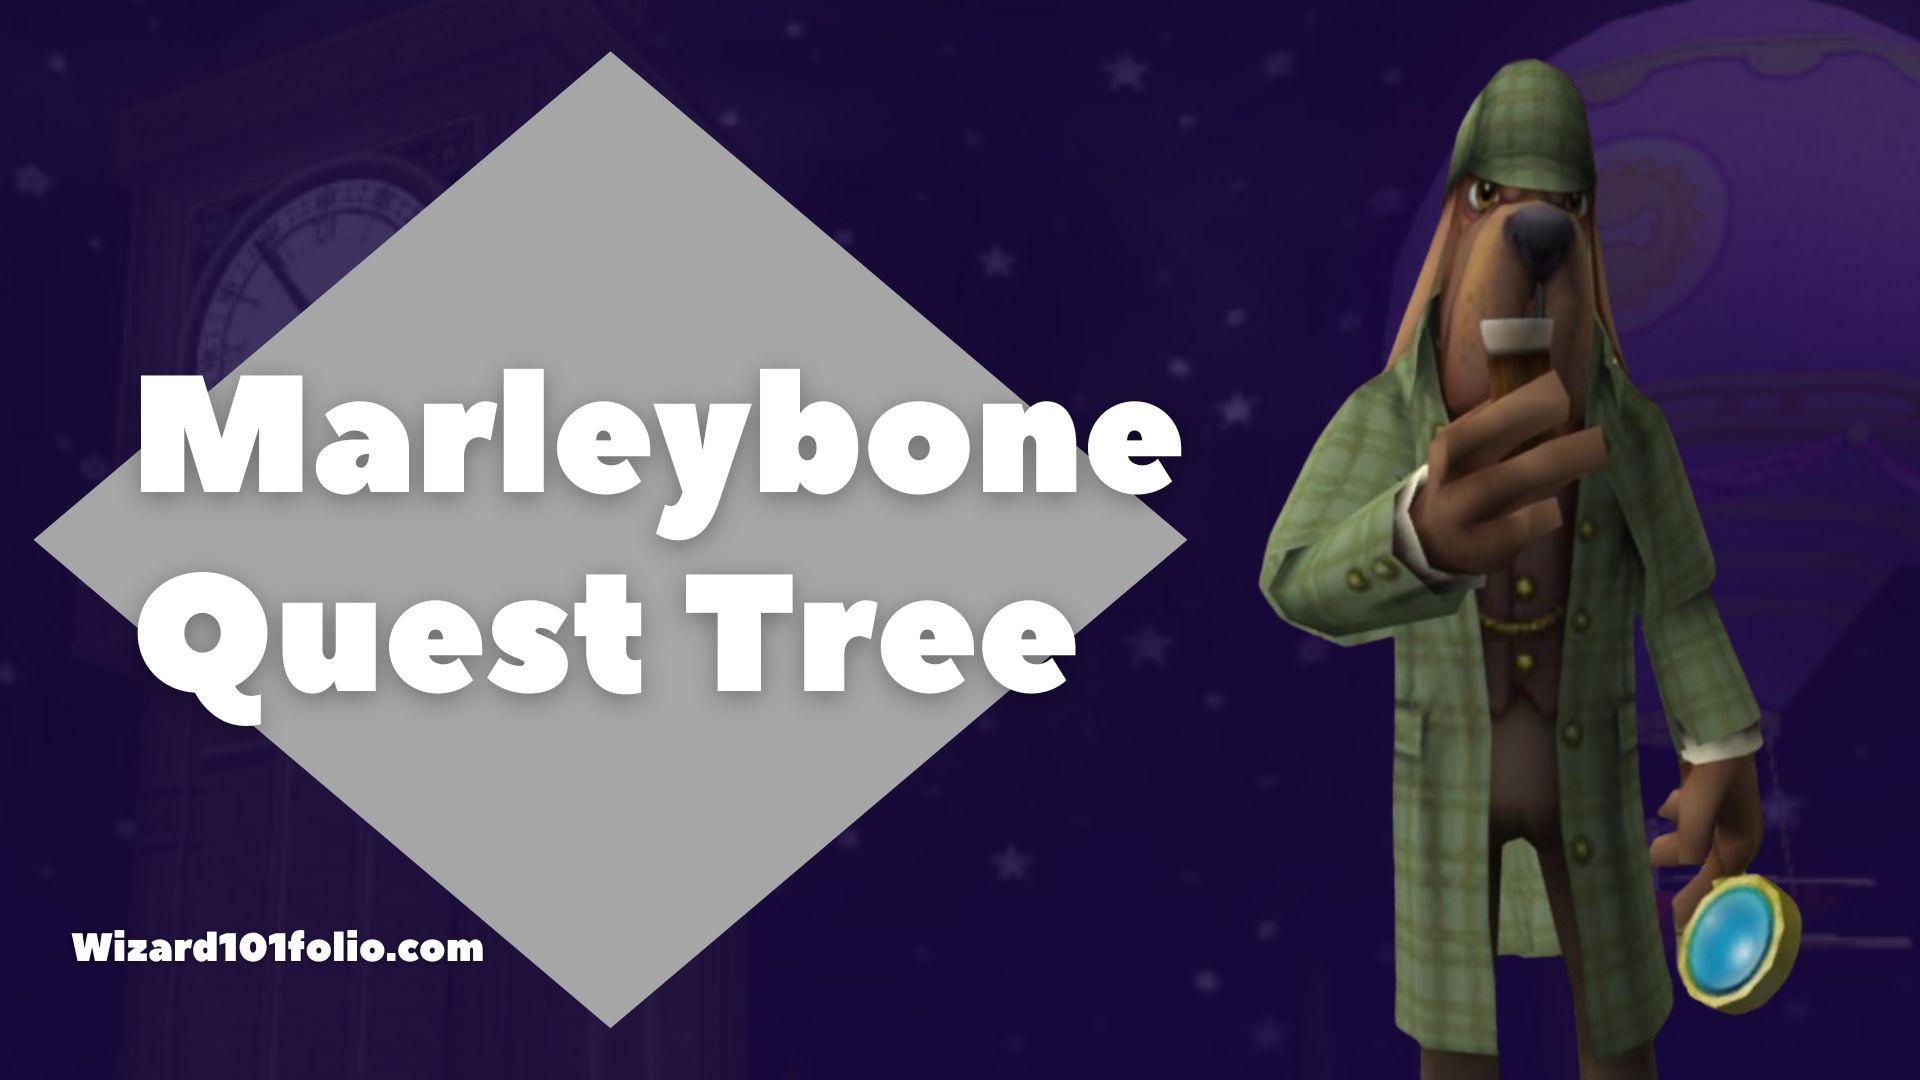 Marleybone Quest Tree